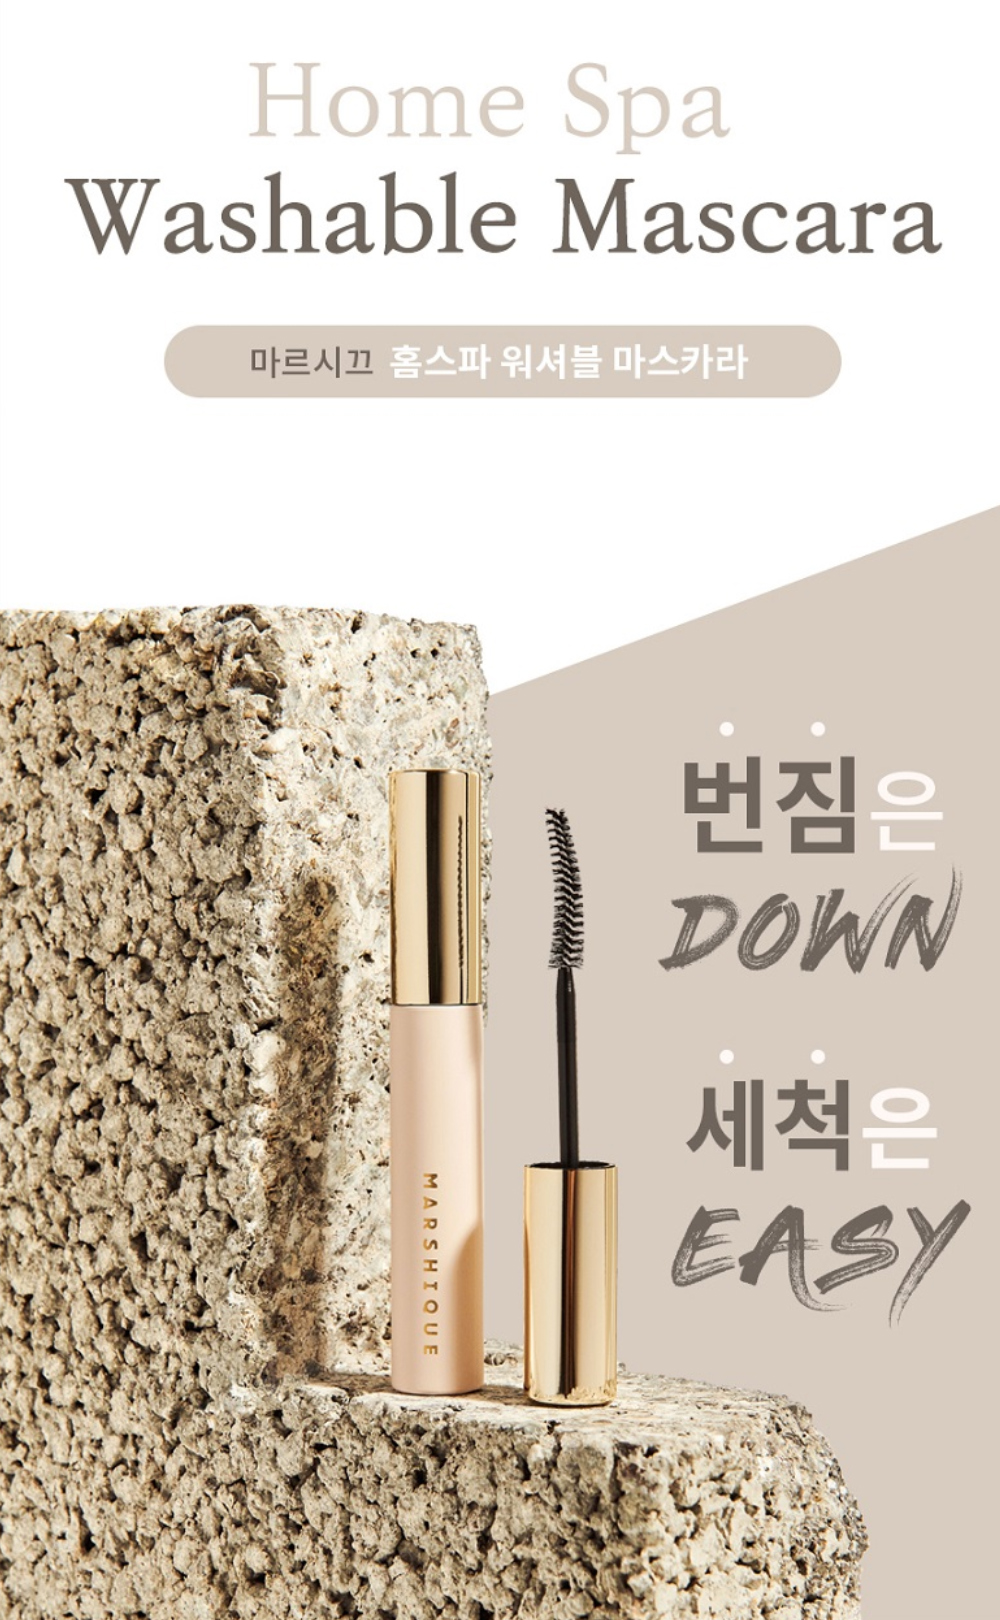 cosmetics product image-S52L5